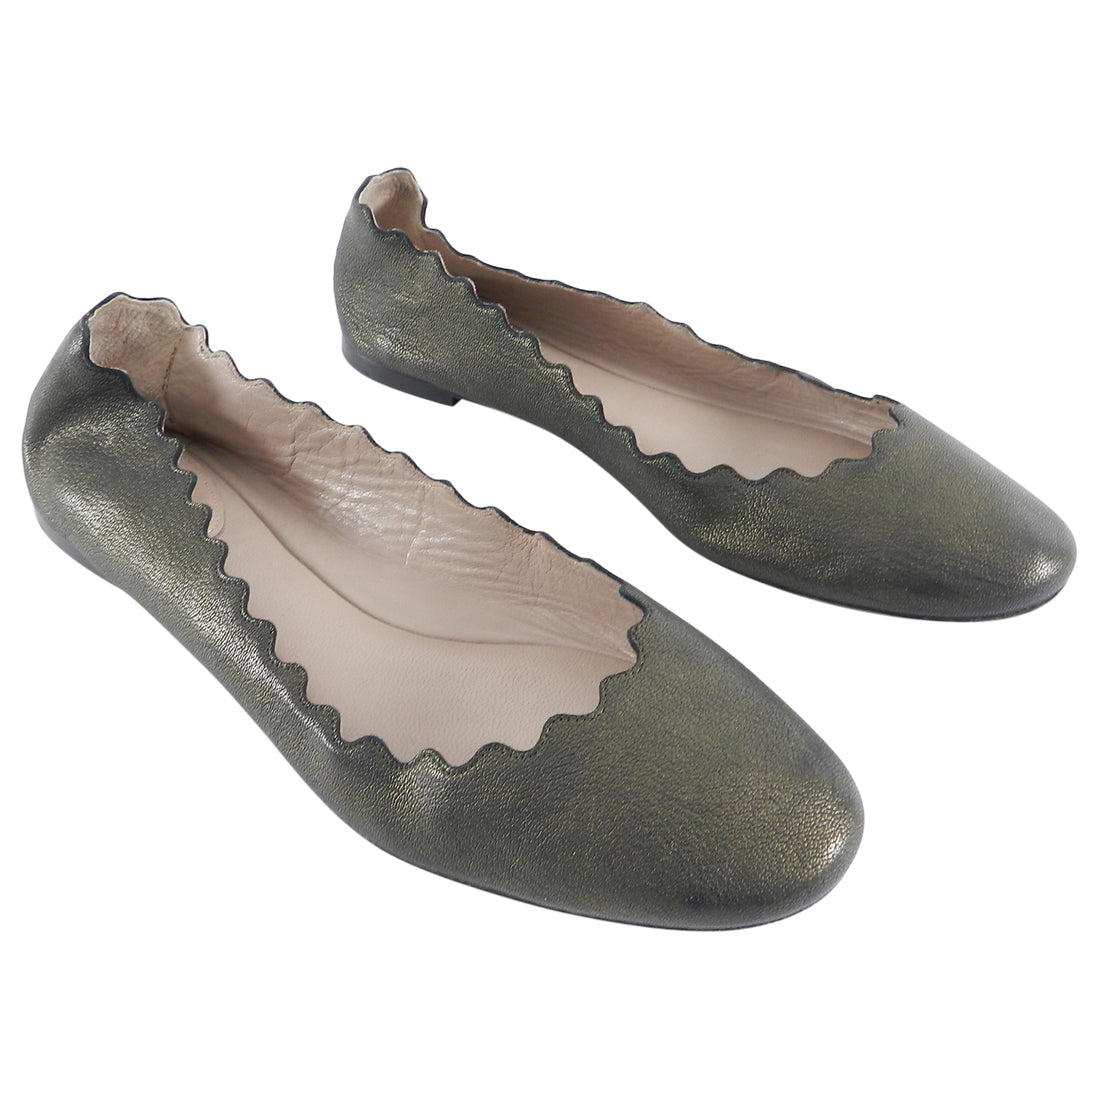 Chloe Dark Bronze Metallic Lauren Scalloped Flat Shoes - 39